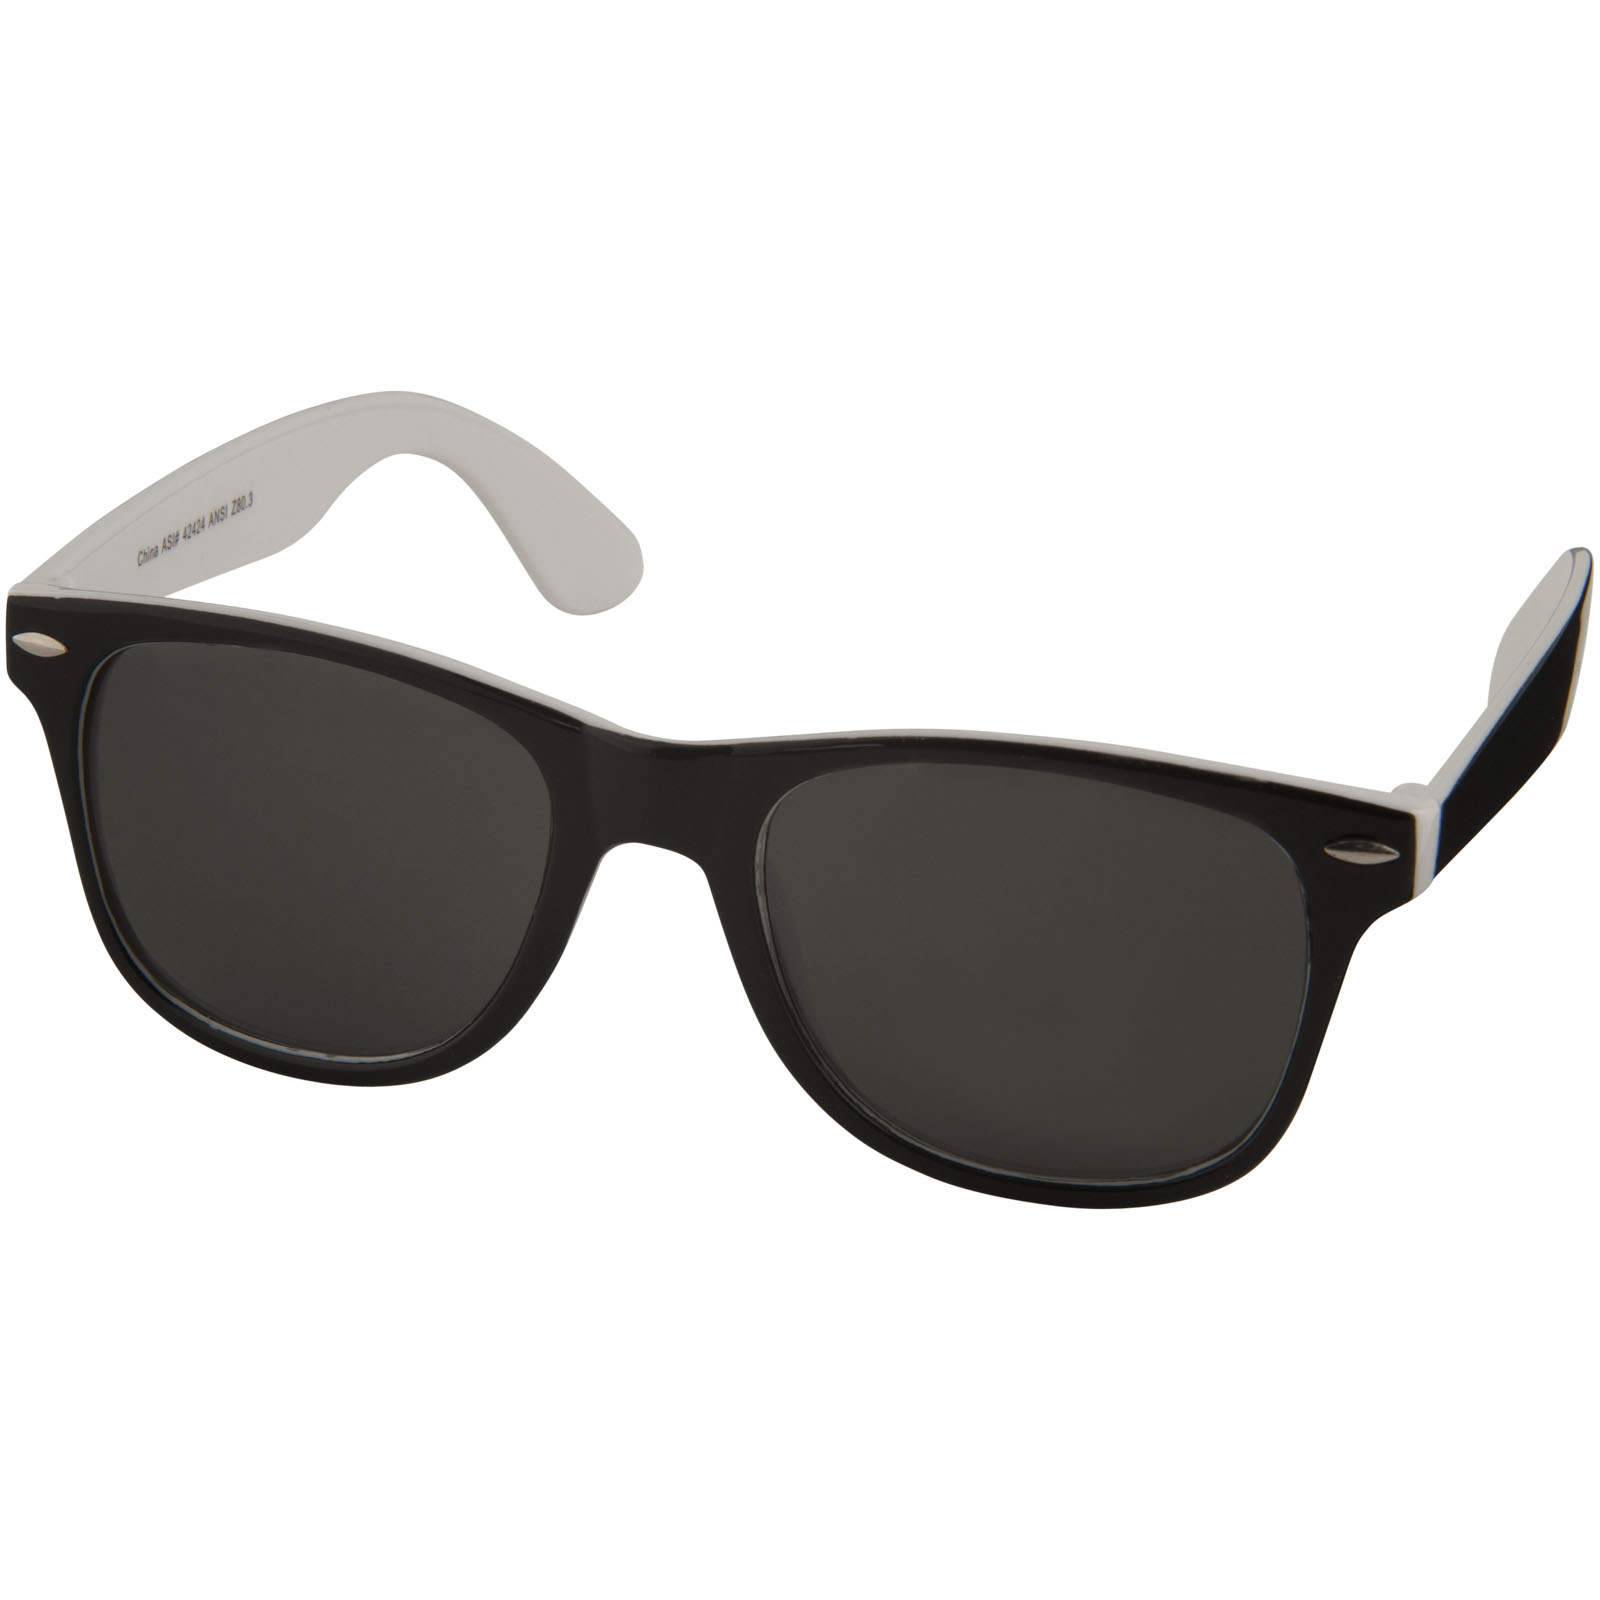 Sunglasses - Sun Ray sunglasses with two coloured tones